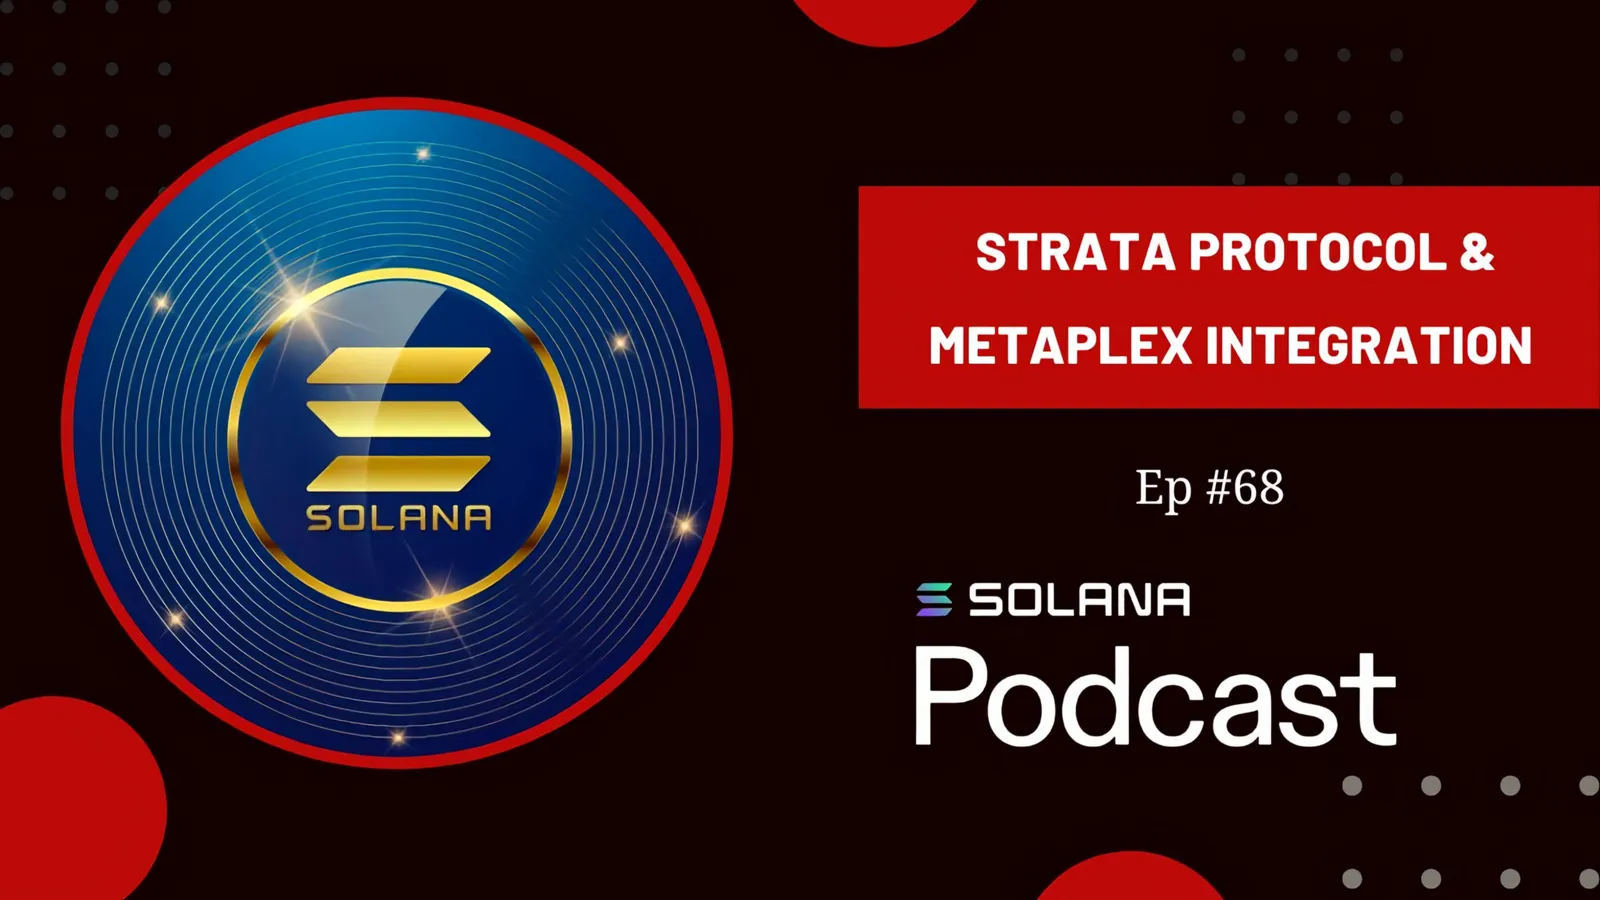 Strata Protocol & Metaplex Integration - Ep #68